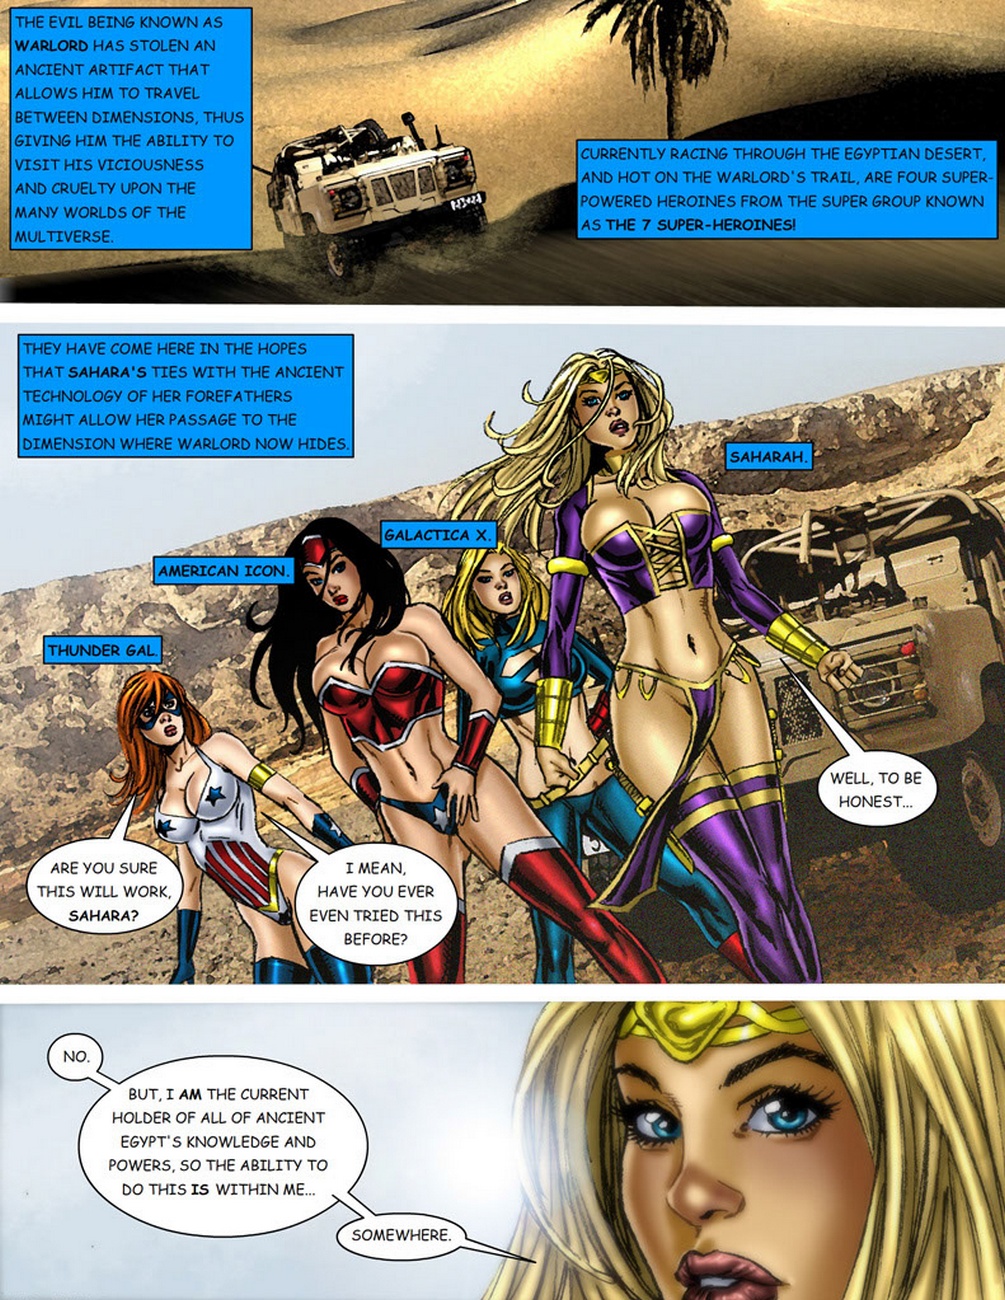 9 superheroines مقابل امراء الحرب 1